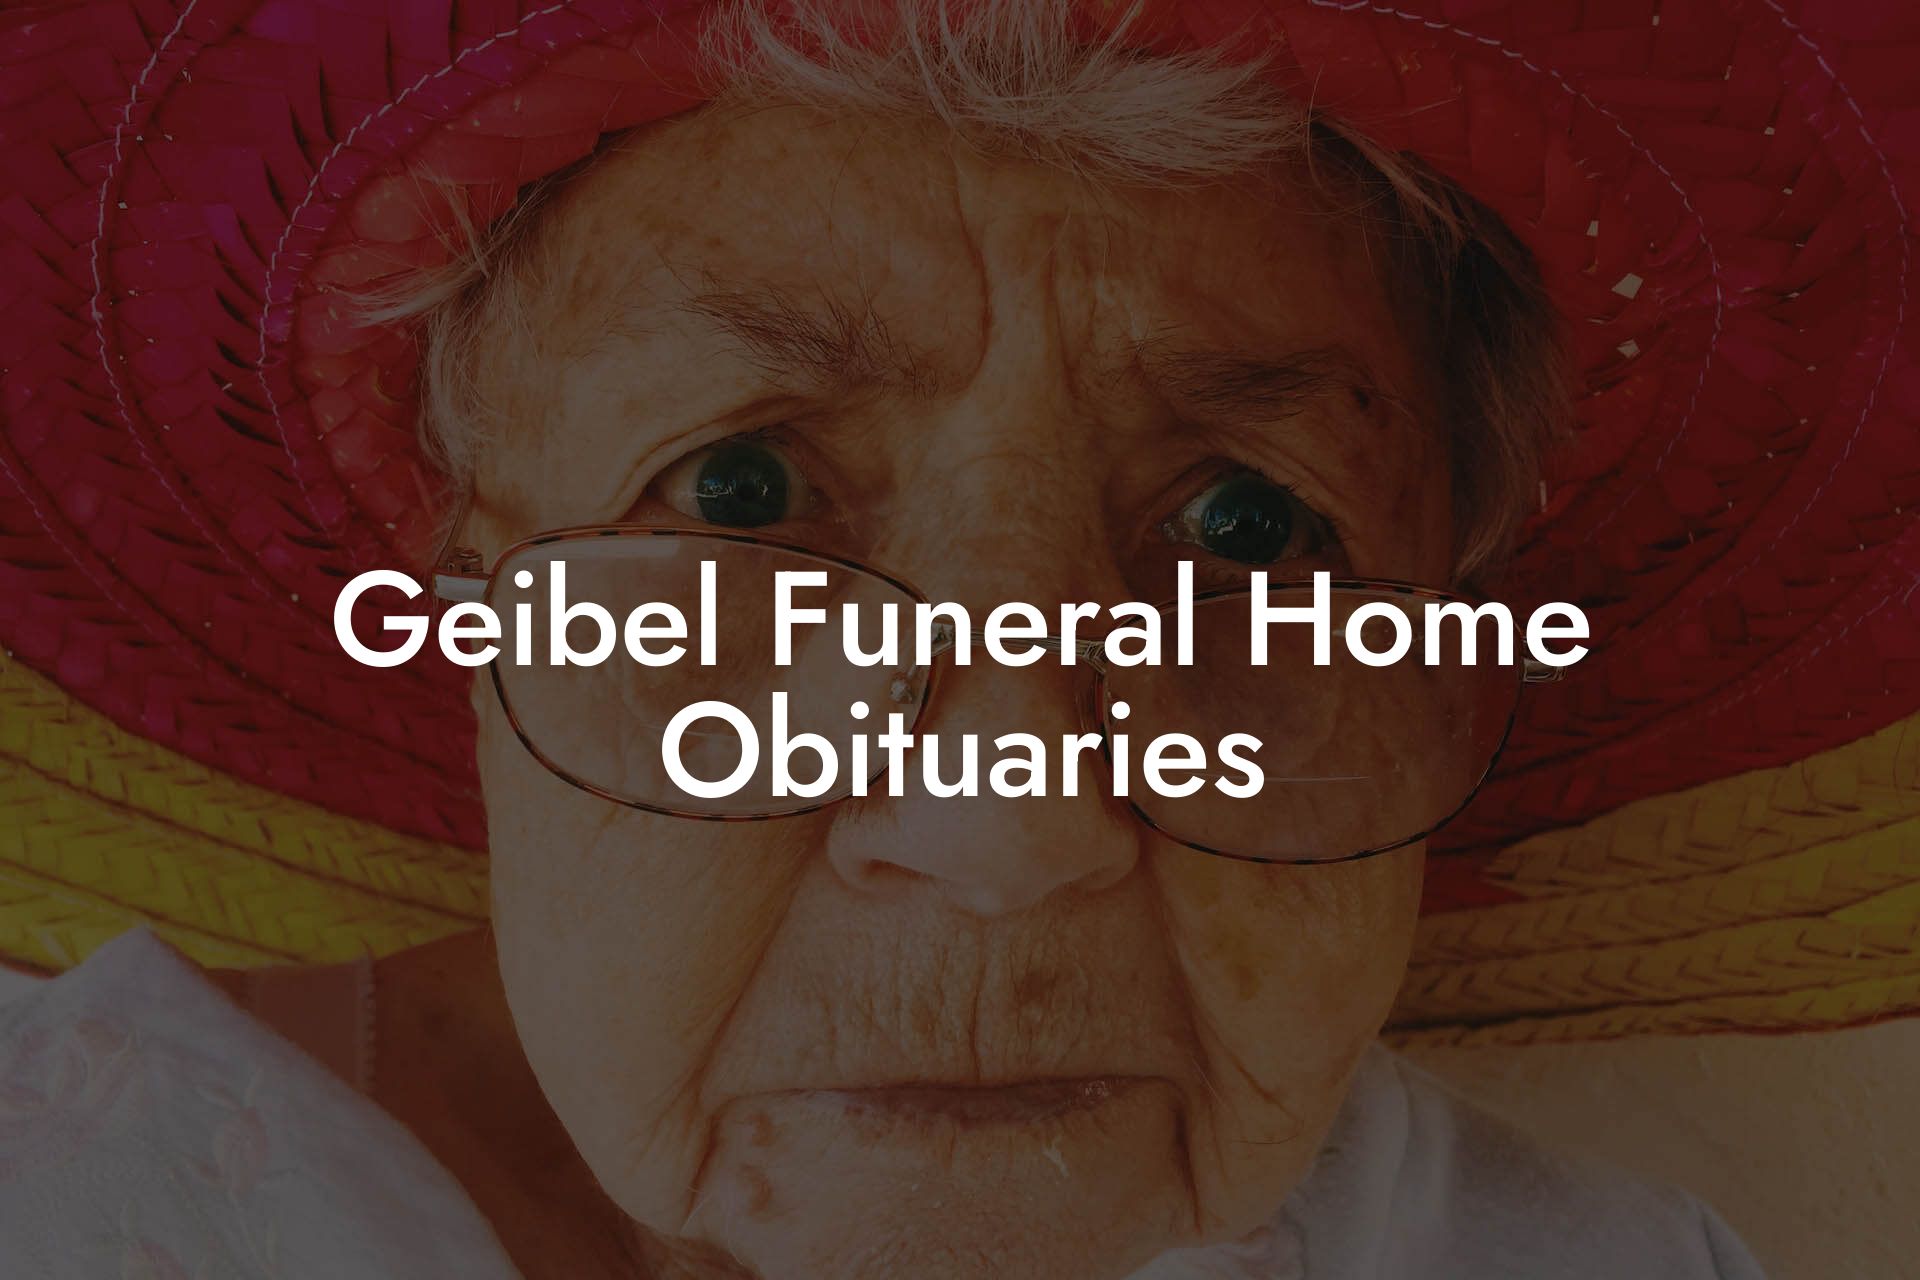 Geibel Funeral Home Obituaries